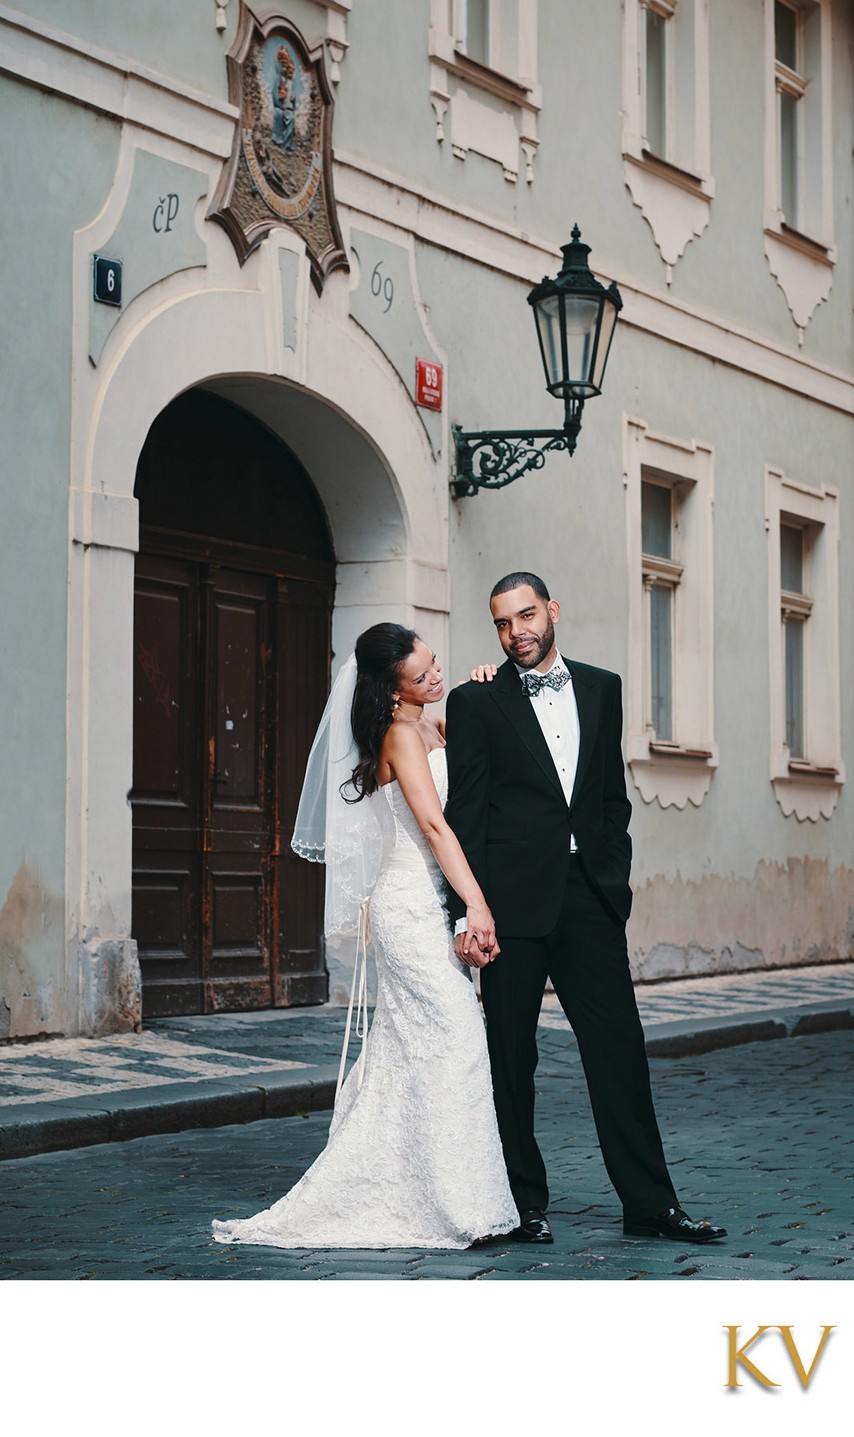 Leslie & Anthony Prague wedding client review